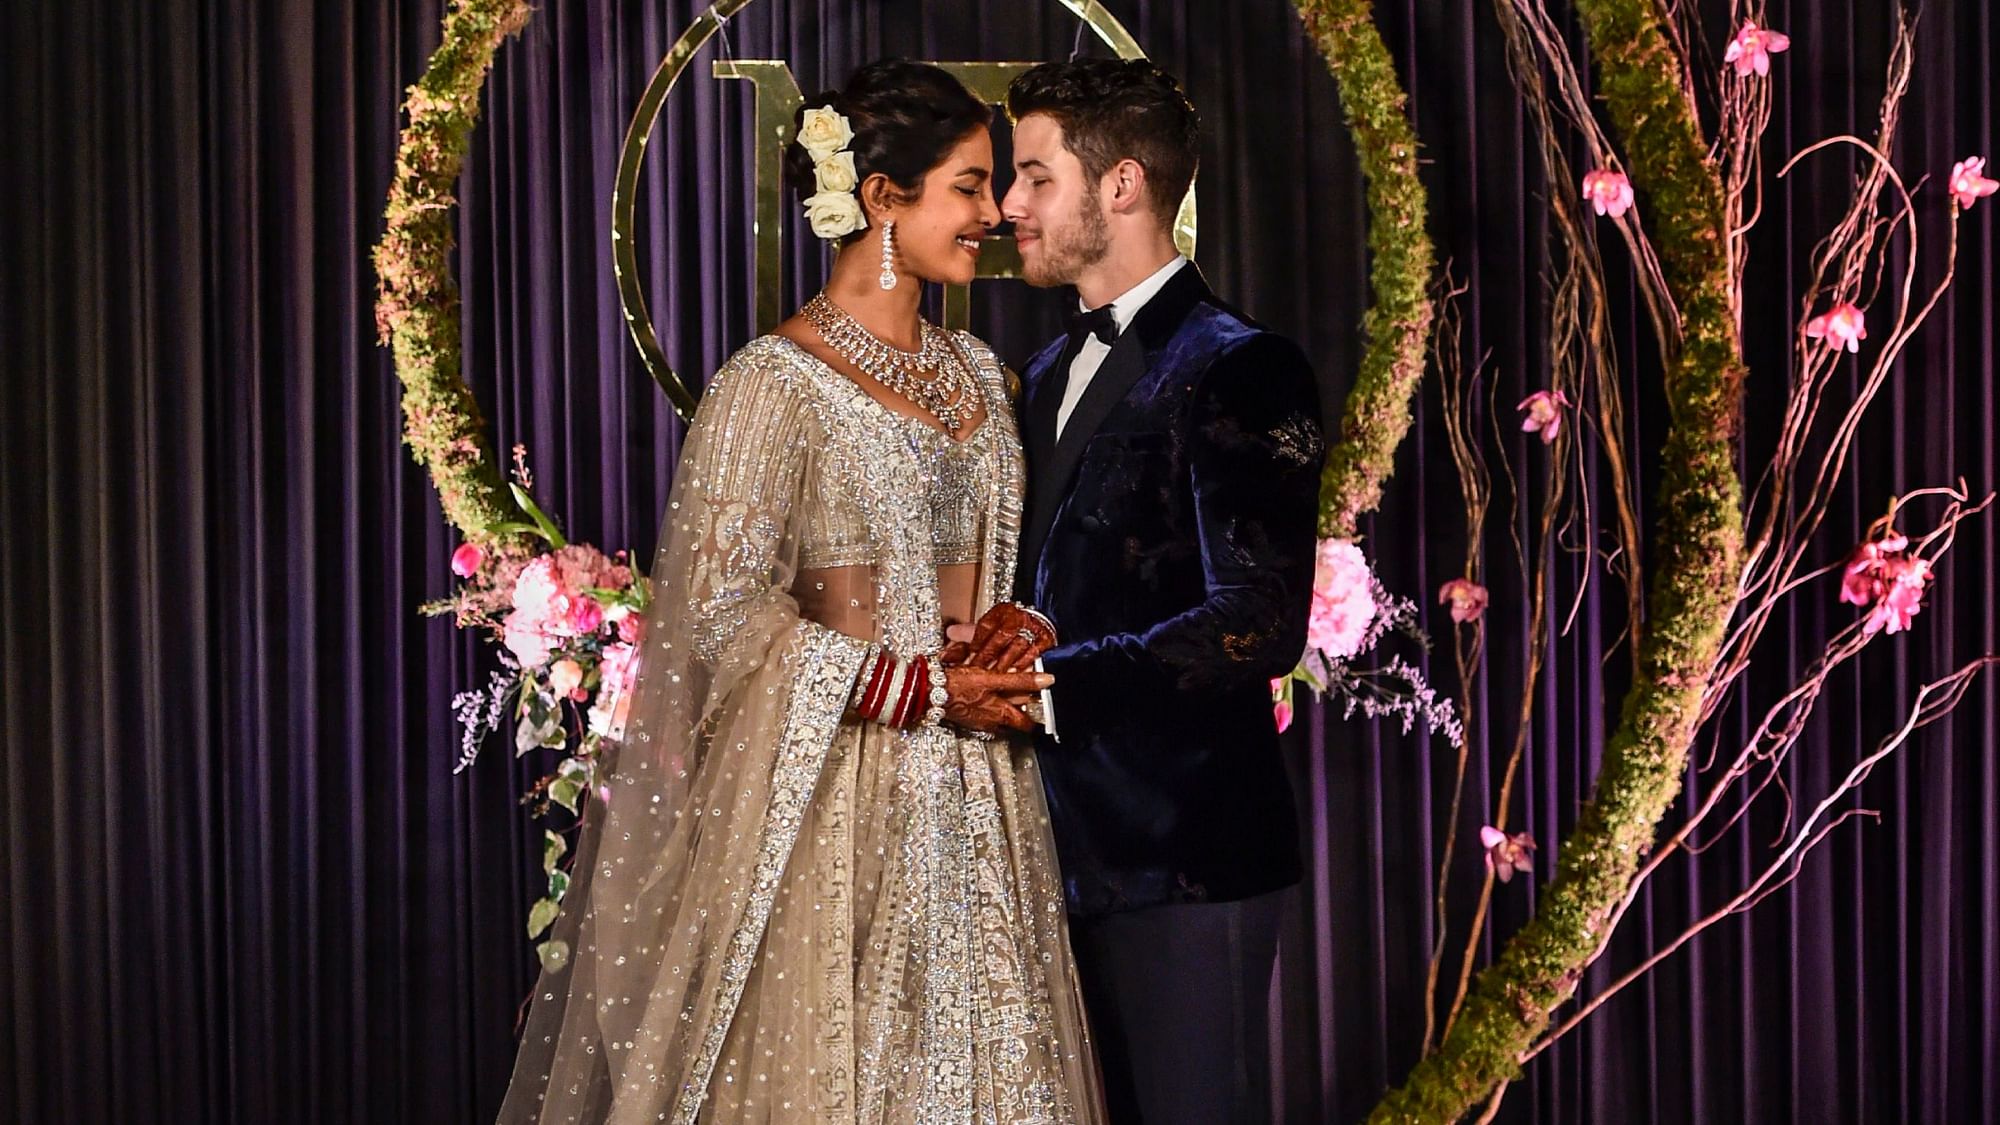 Newly-wed Bollywood actor Priyanka Chopra and American singer Nick Jonas pose for photos during their wedding reception, in New Delhi, Tuesday, Dec. 4, 2018.